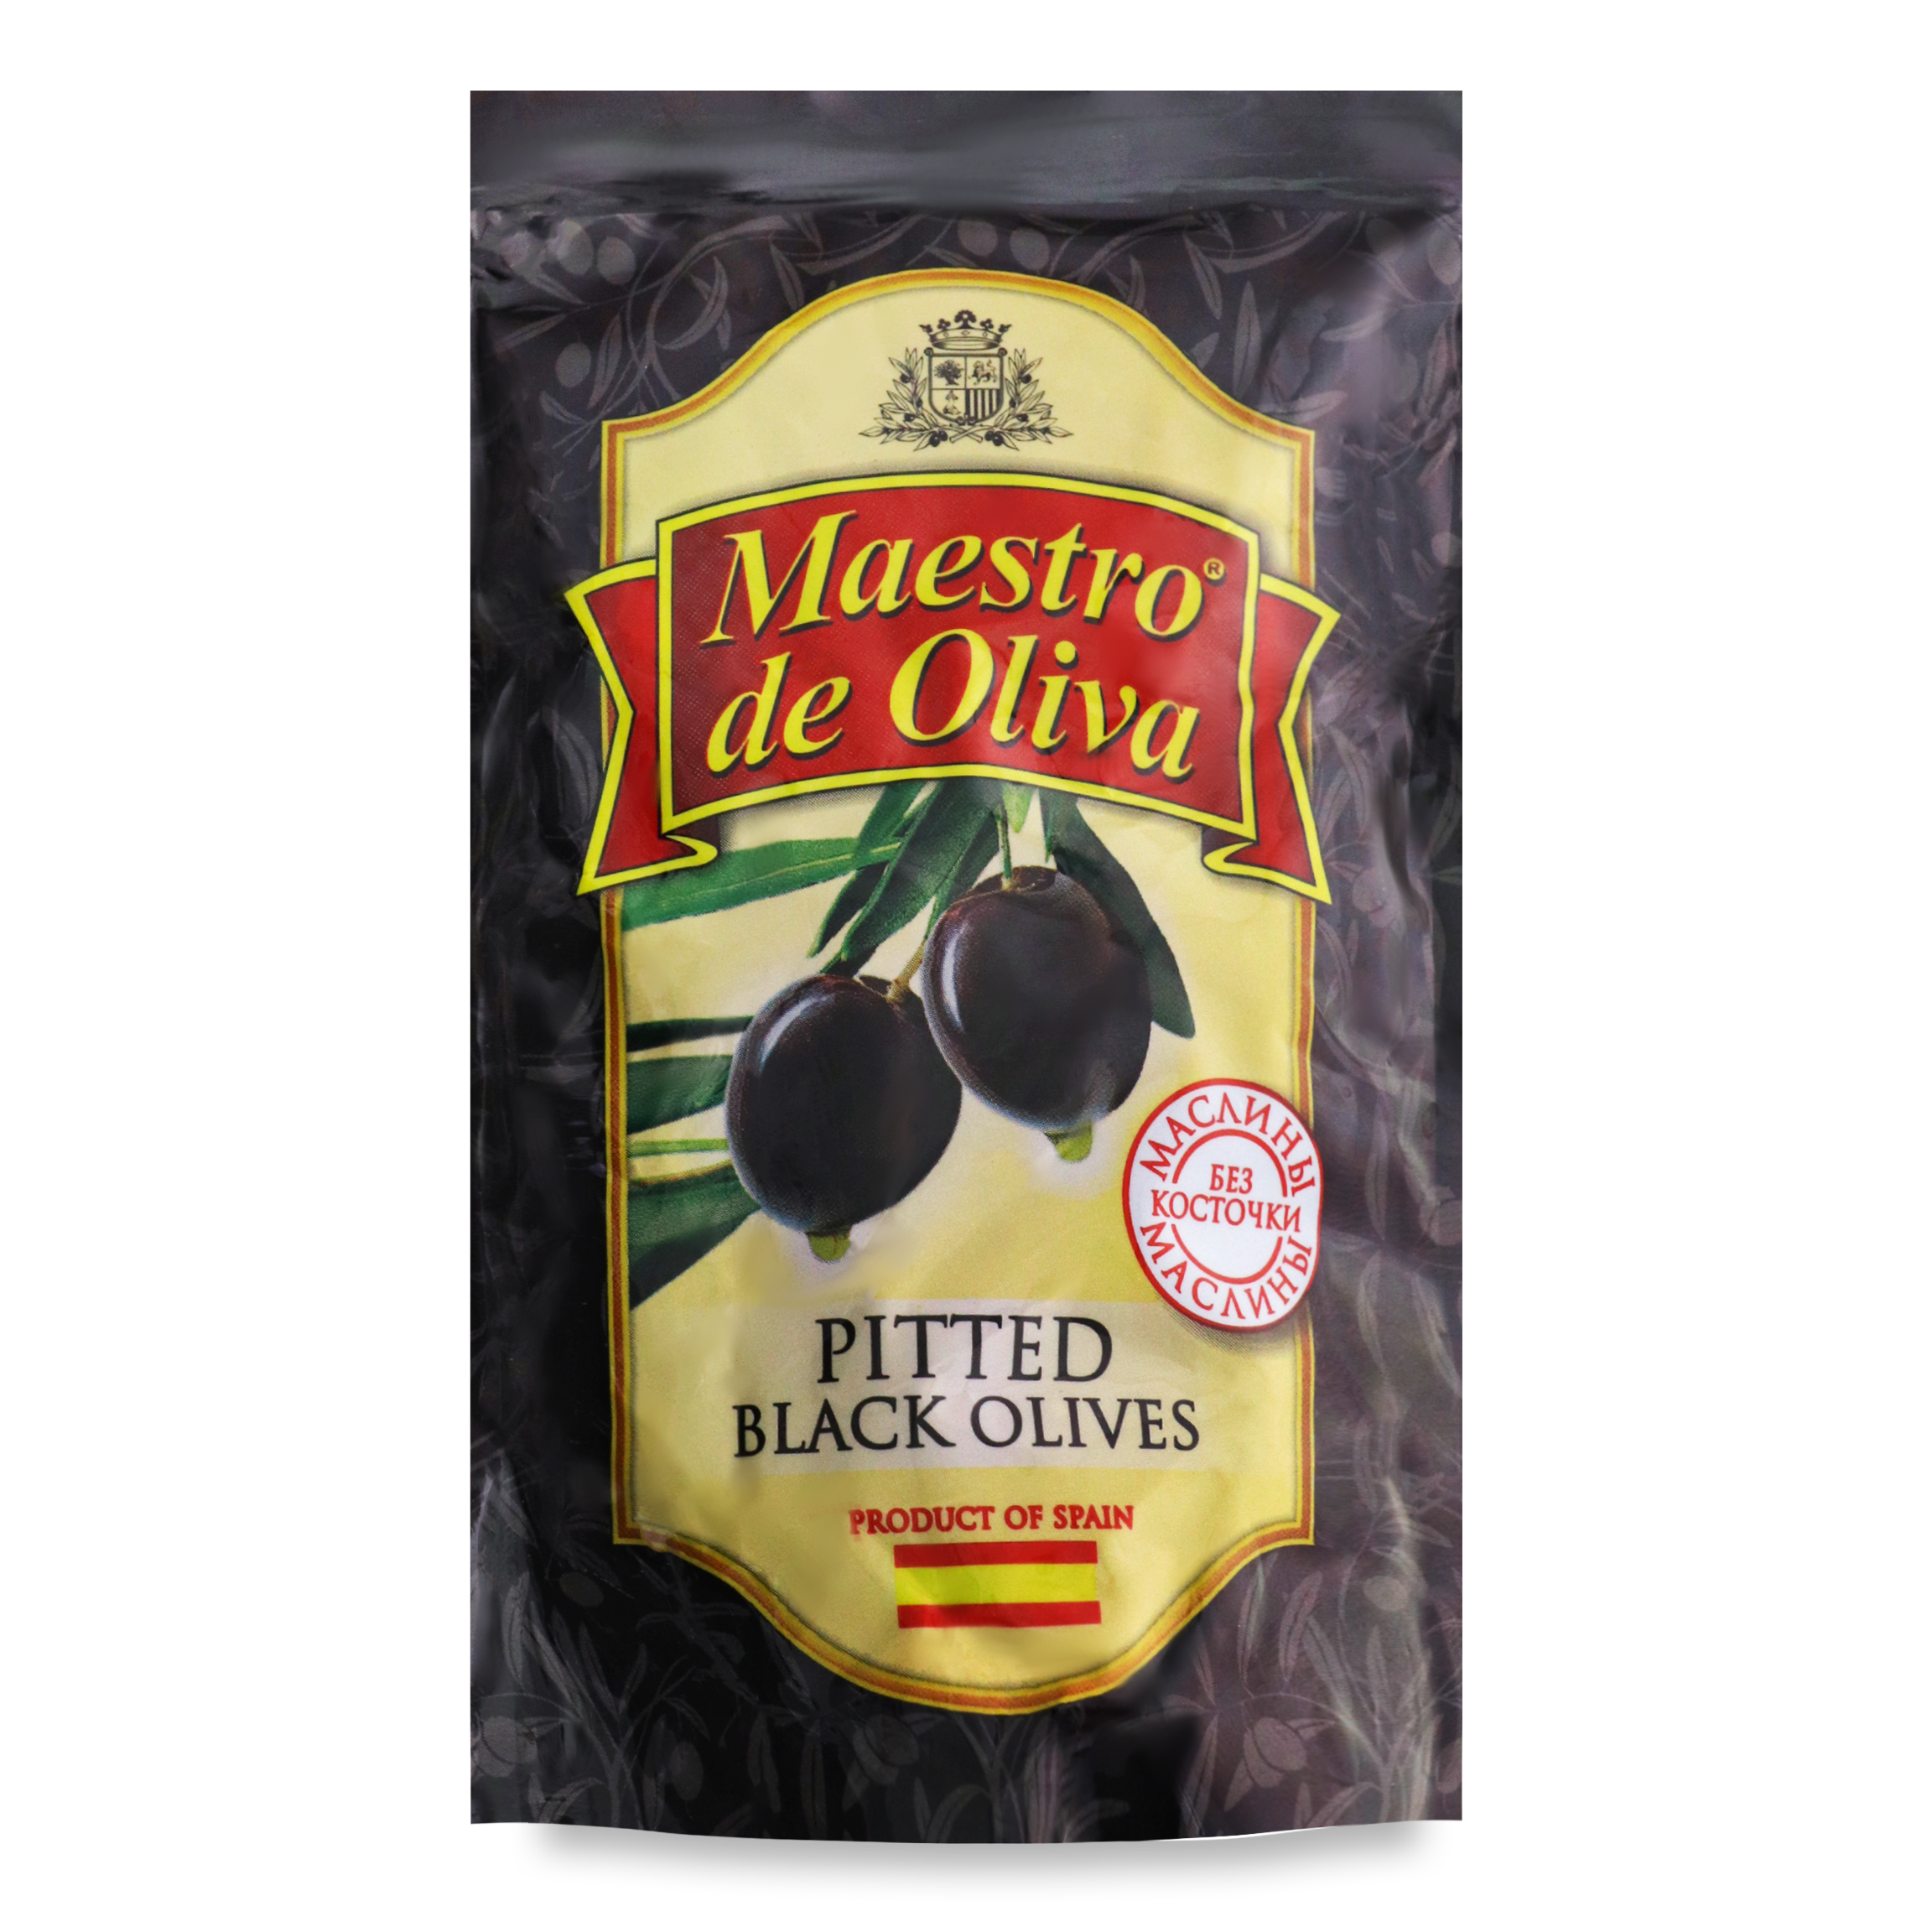 Maestro de Oliva Pitted Black Olive 170g